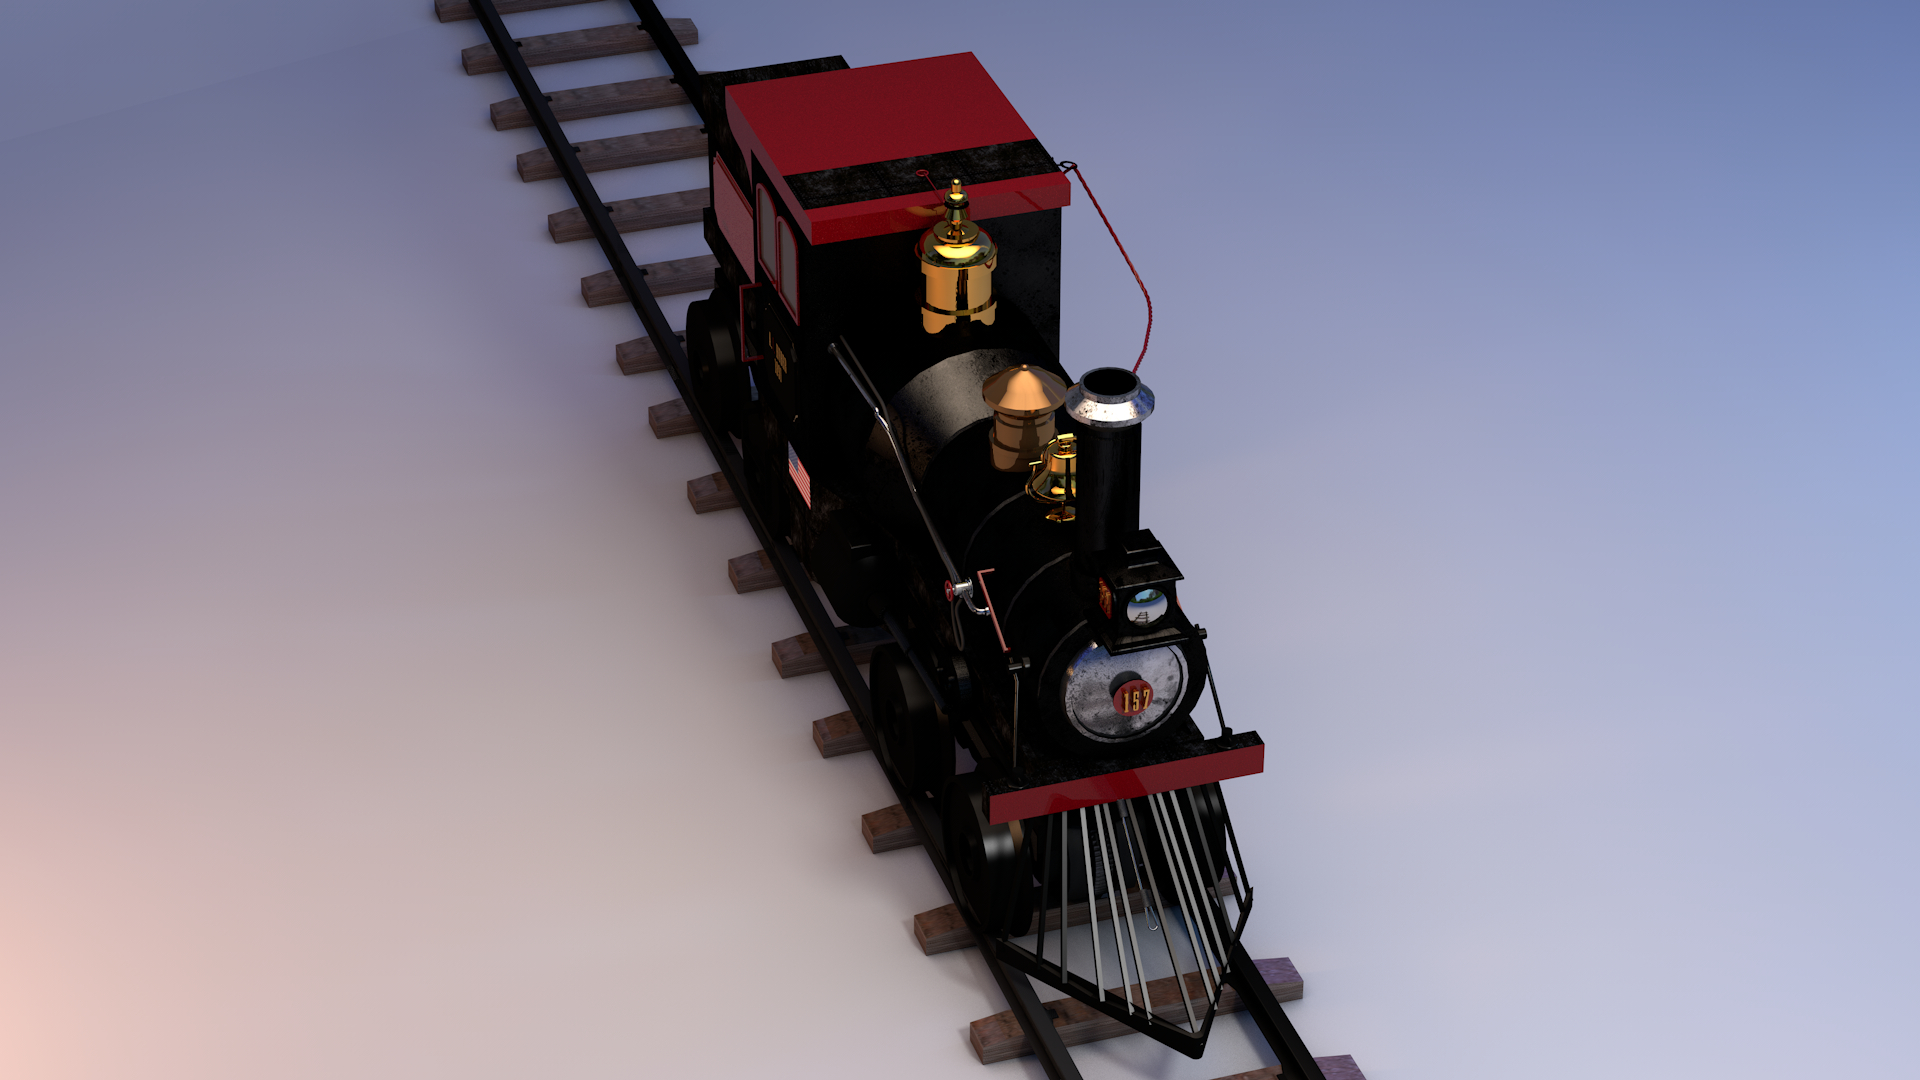 steam locomotive railway in Cinema 4d maxwell render image